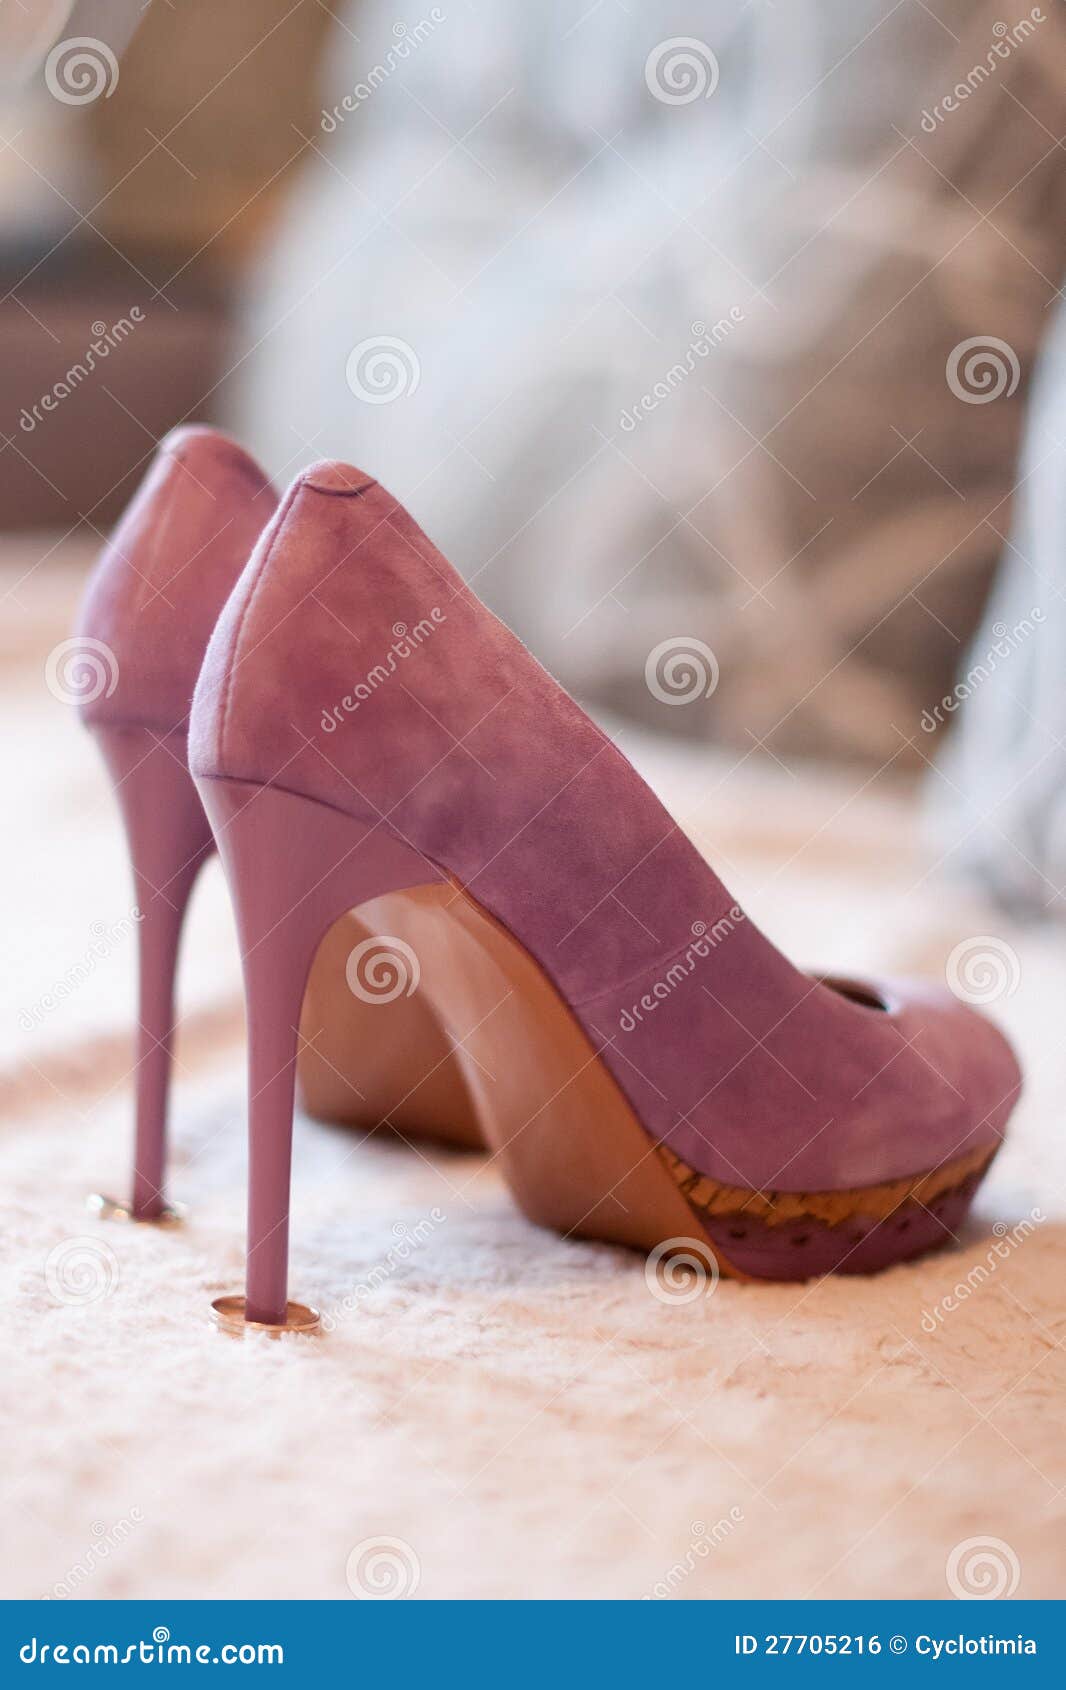 Buy Low Purple Heels Online In India - Etsy India